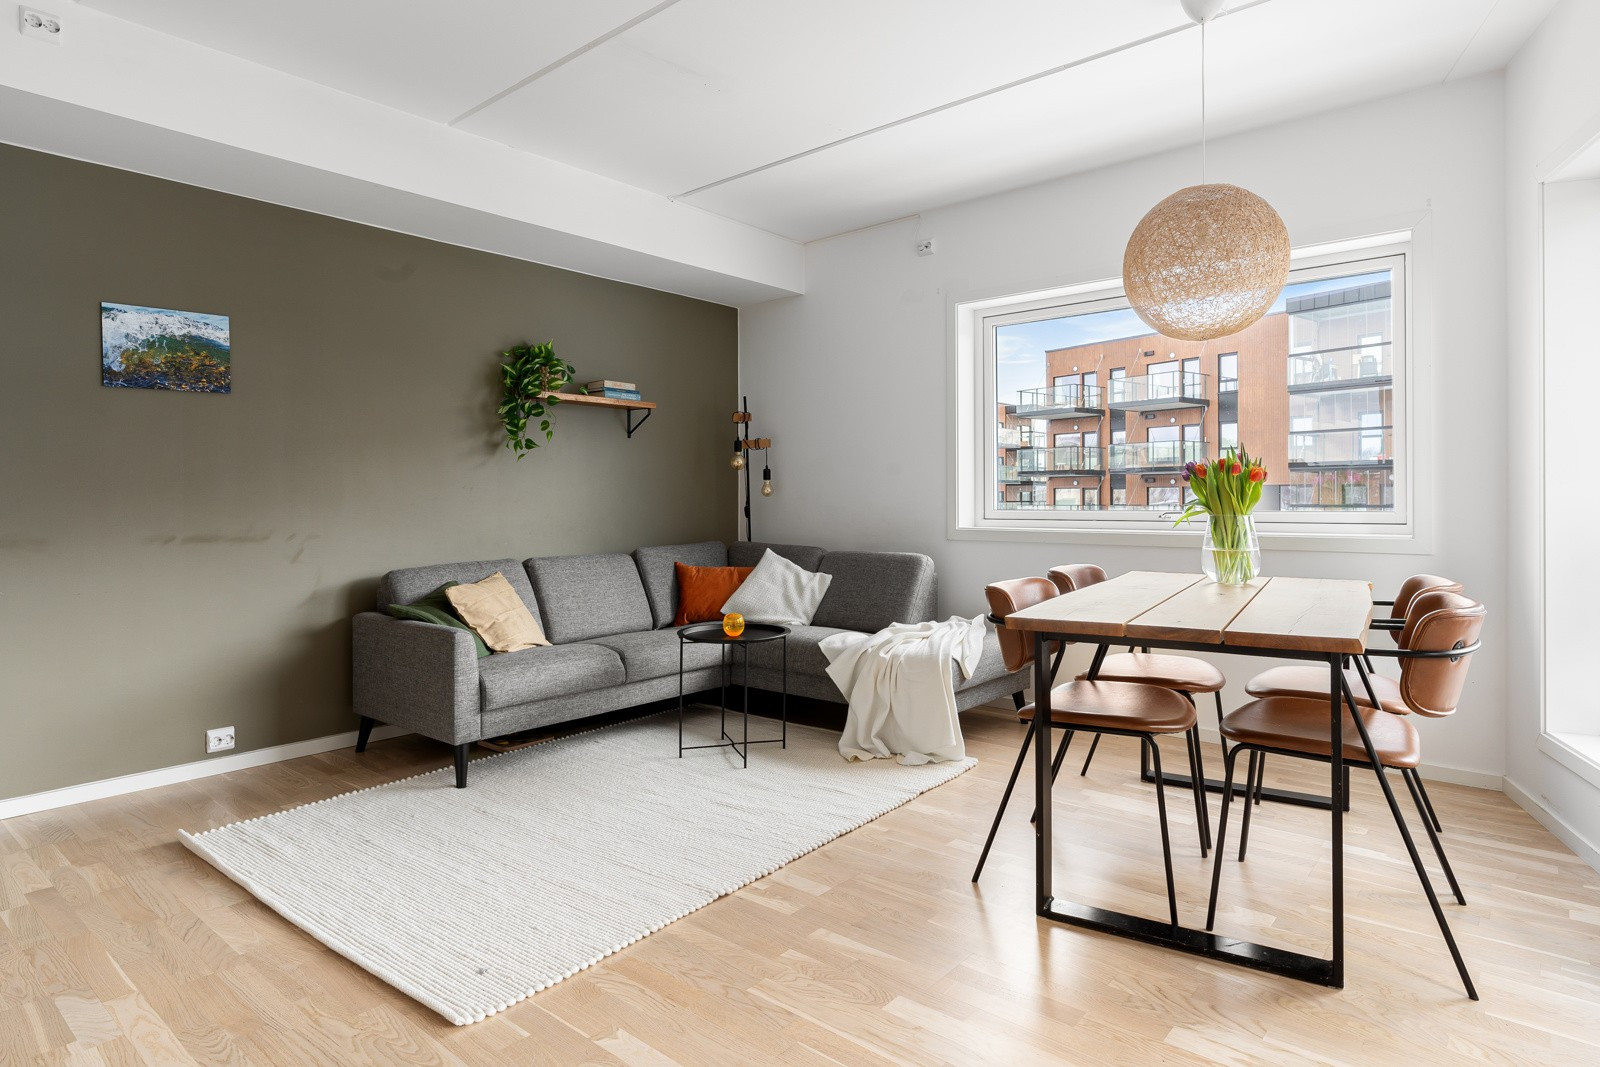 Stuen fremstår lys og romslig med god plass til sofagruppe med tilhørende møblement!